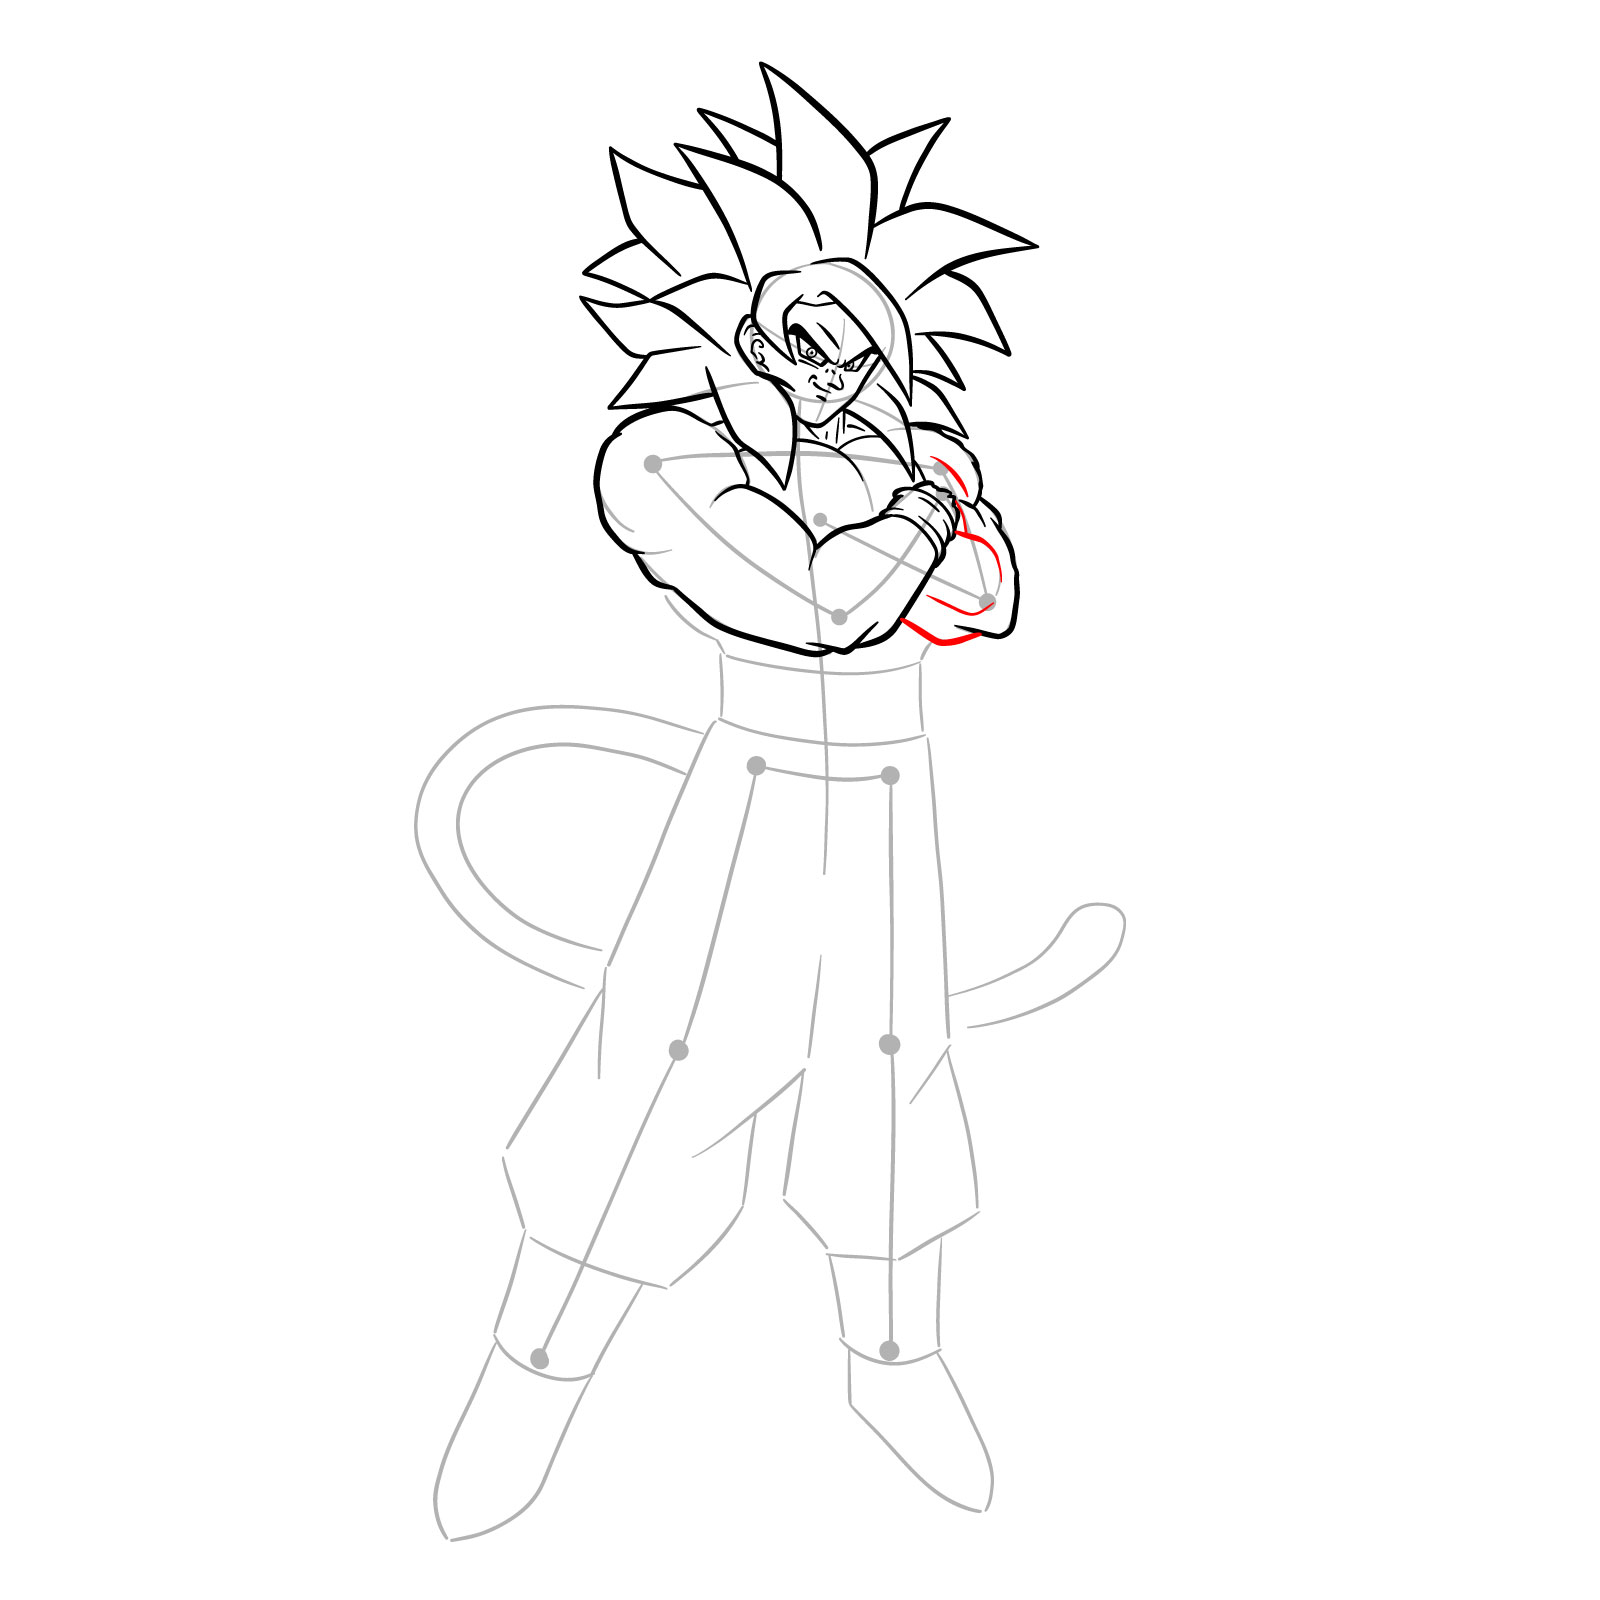 How to tát draw Goku Super Saiyan 4 - step 19